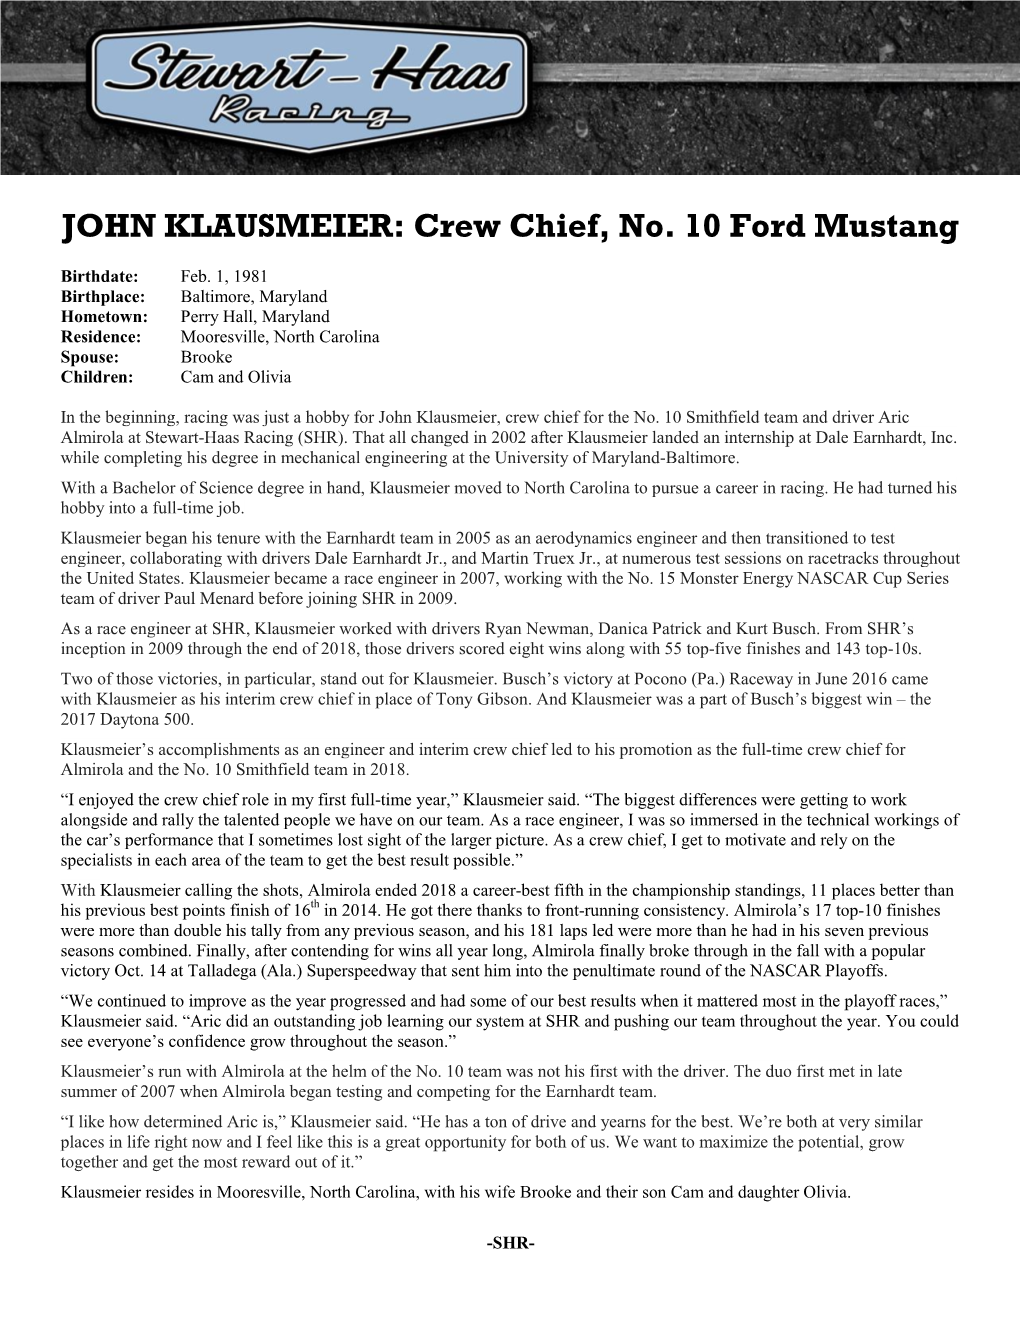 JOHN KLAUSMEIER: Crew Chief, No. 10 Ford Mustang